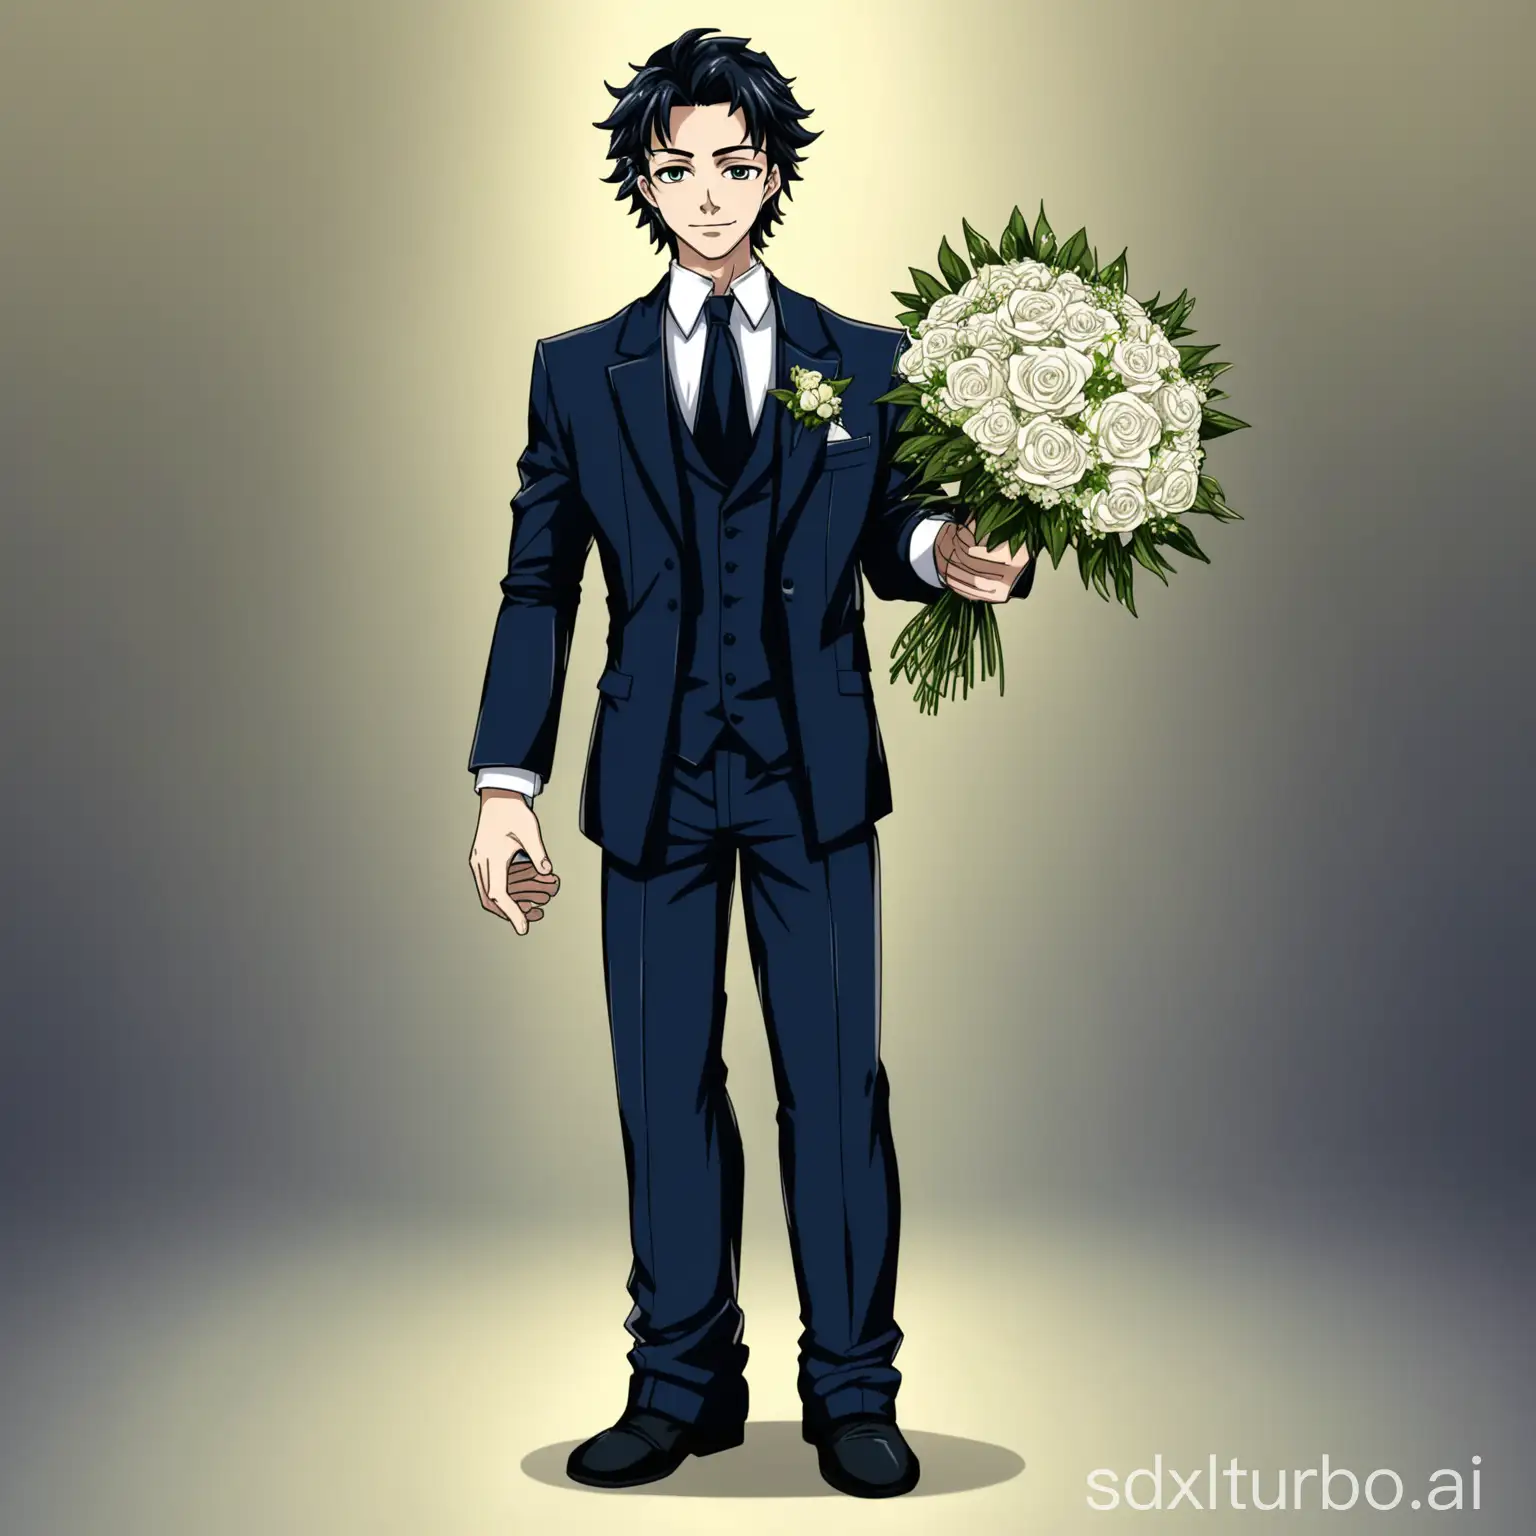 Elegant-Groom-Holding-Bouquet-in-Anime-Style-Wedding-Attire